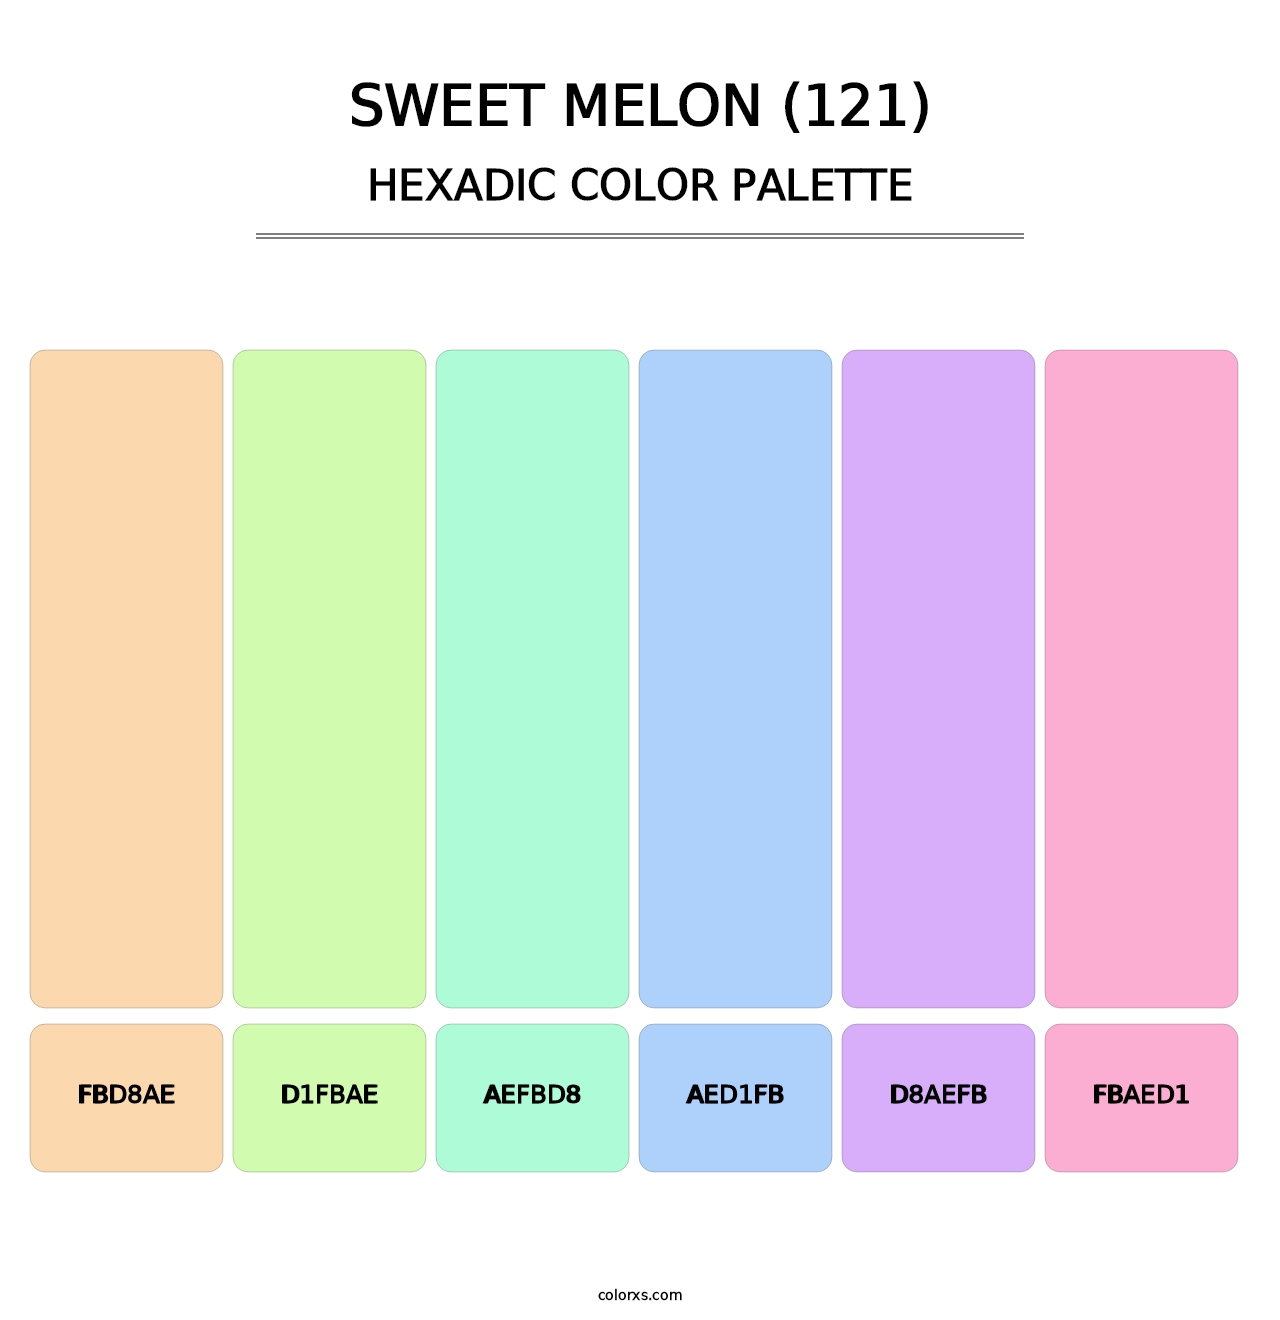 Sweet Melon (121) - Hexadic Color Palette